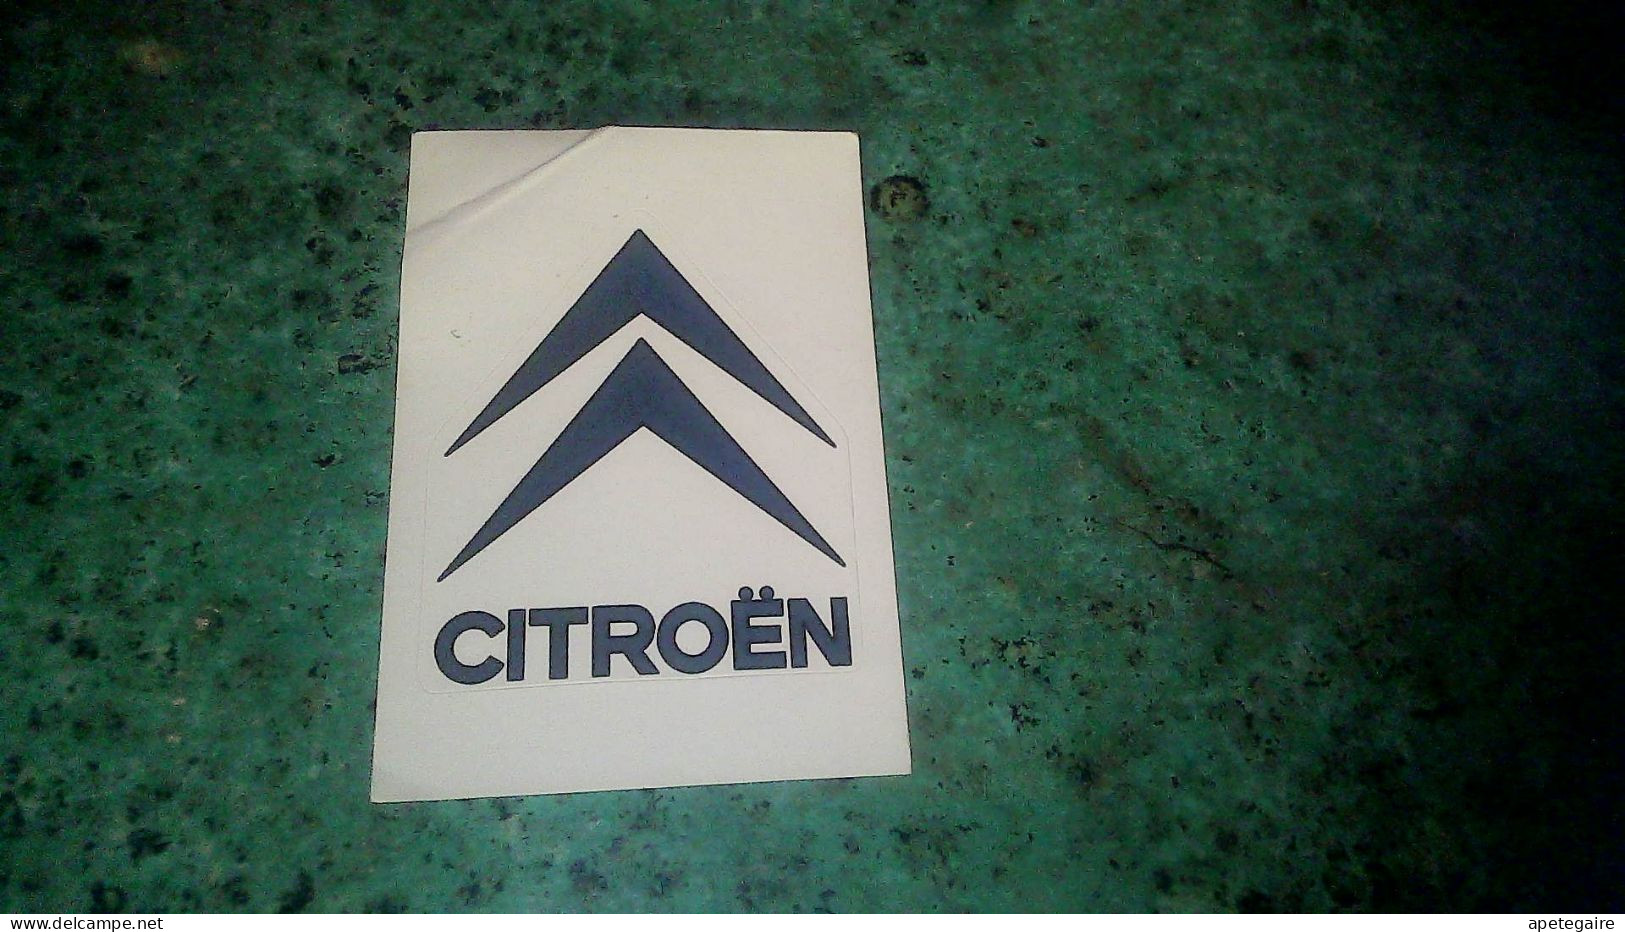 Autocollant Figurine Pannini Pour Album Super Auto N°  84 Logo Automobile  Citroën - Stickers